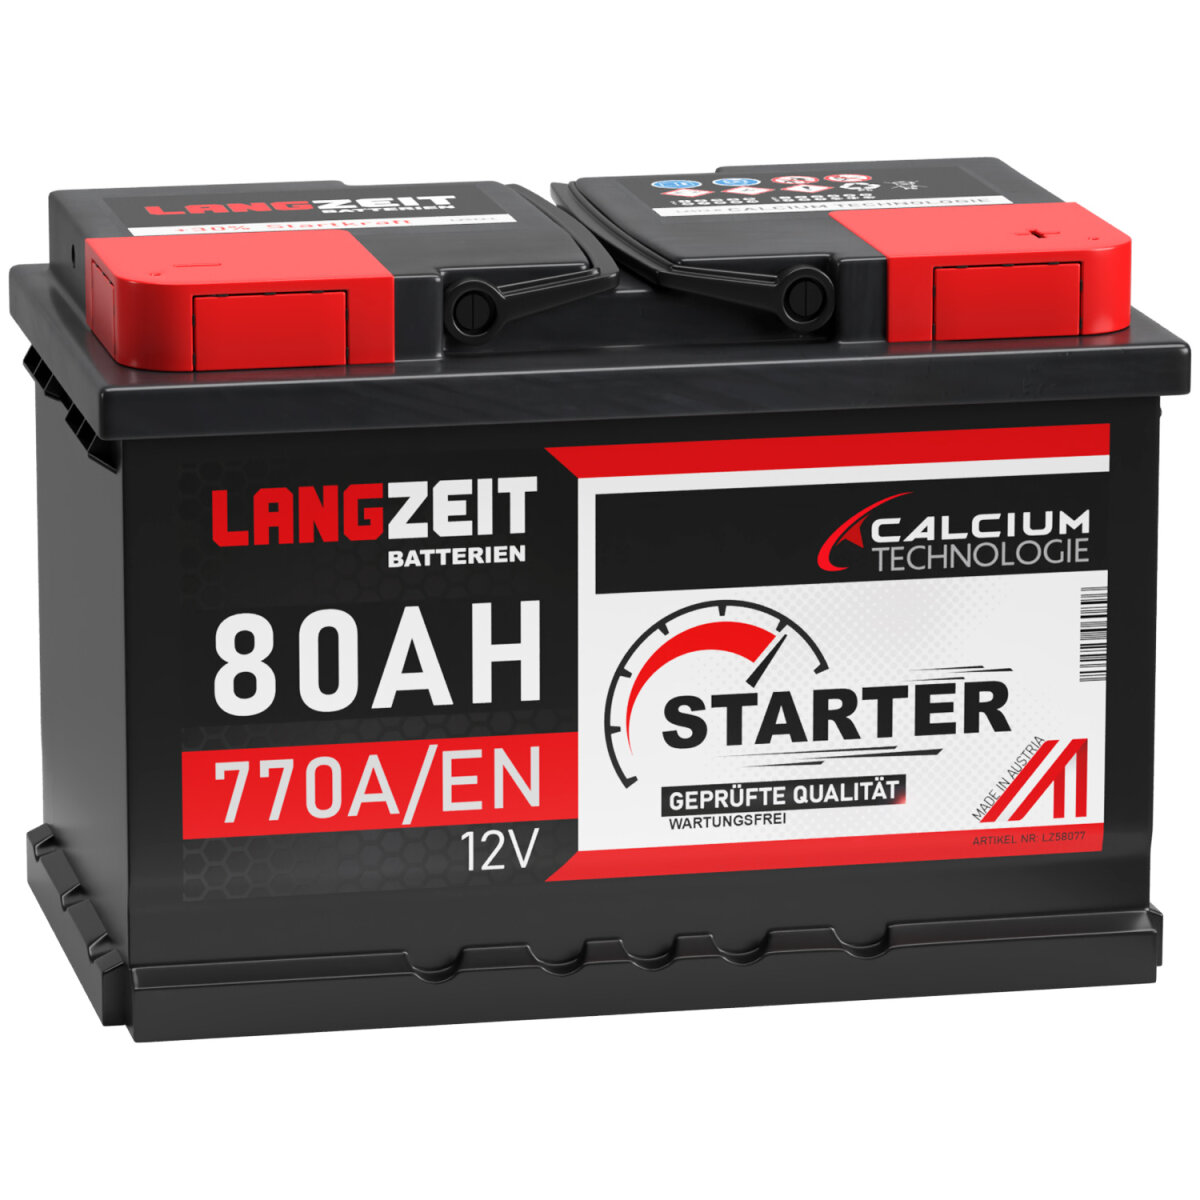 https://www.winnerbatterien.de/media/image/product/7748/lg/langzeit-starter-autobatterie-80ah-12v.jpg